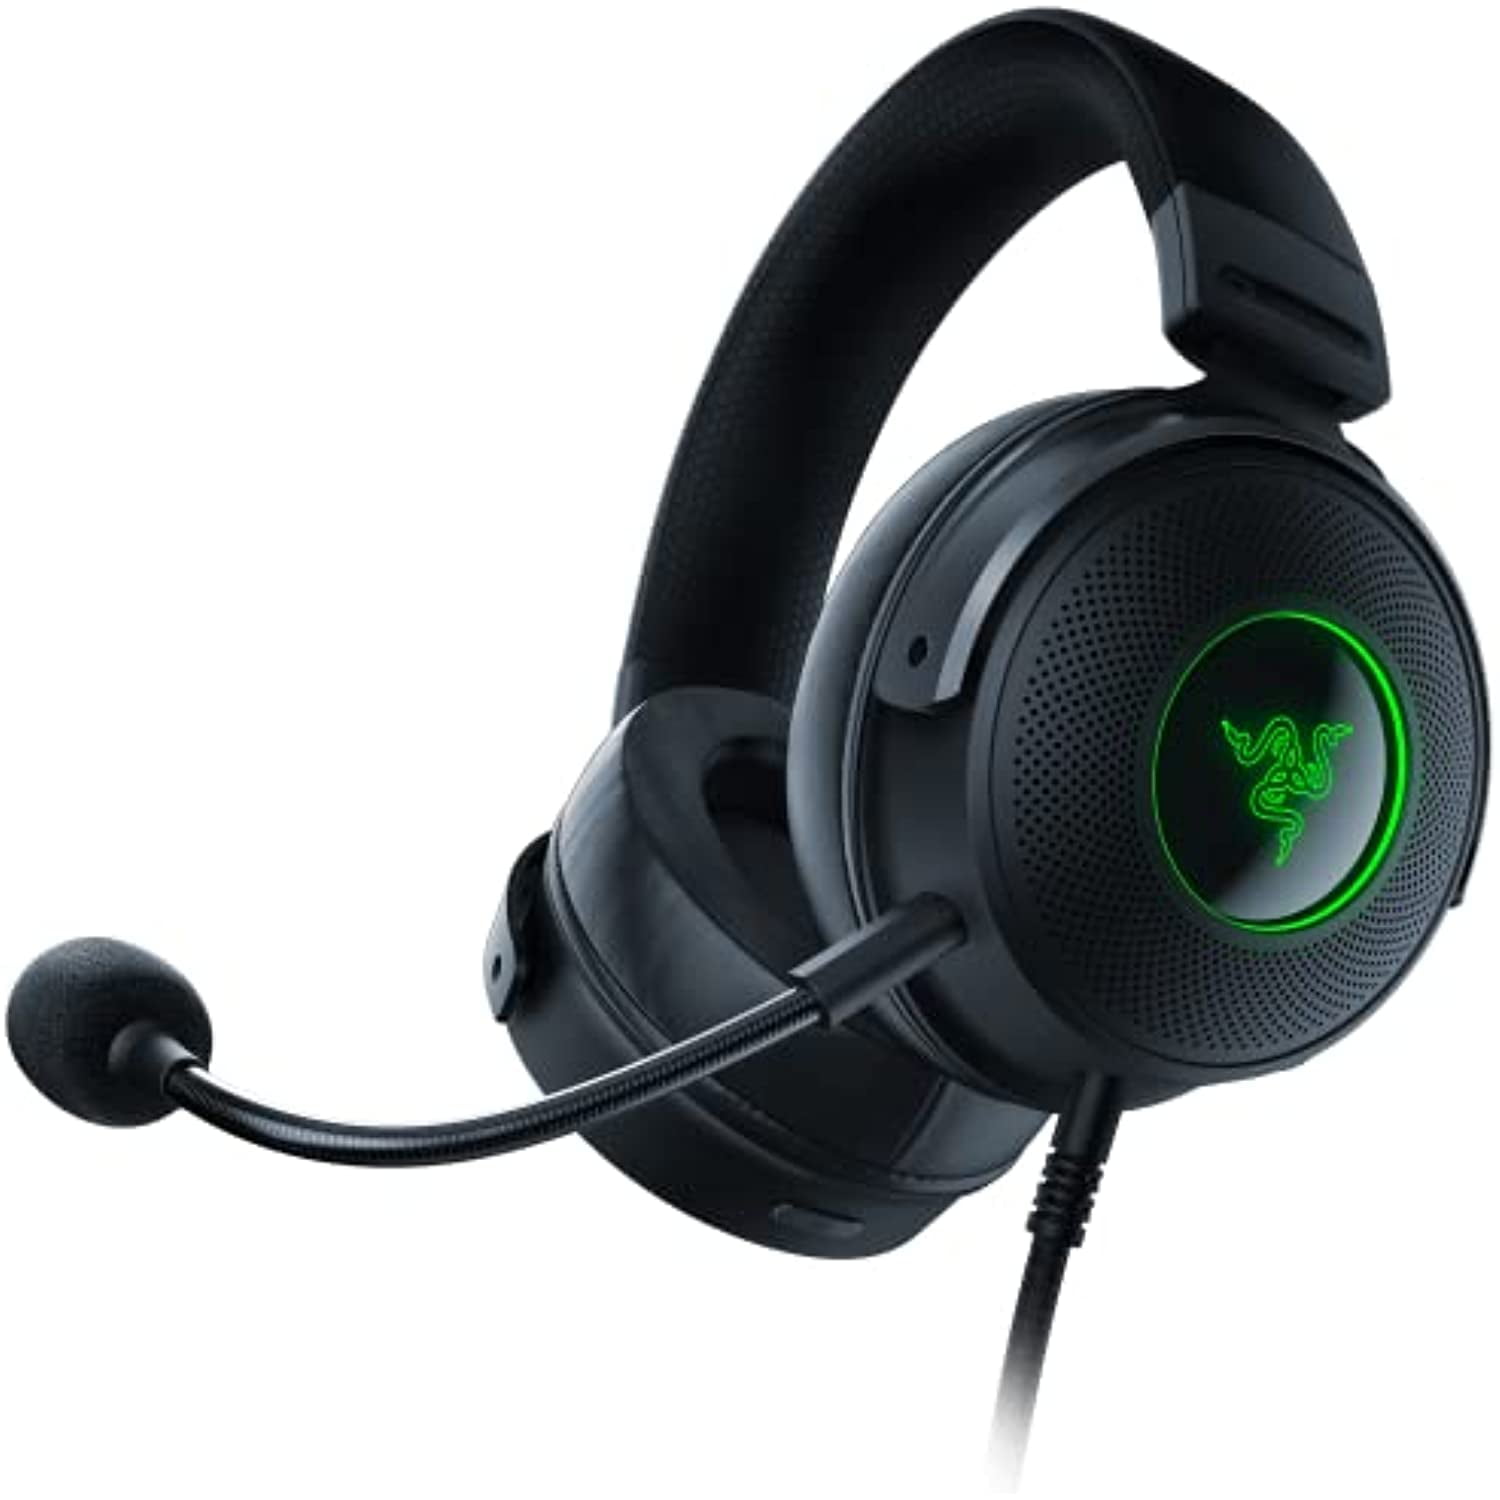  Razer Kraken Tournament Edition THX 7.1 Surround Sound Gaming  Headset: Retractable Noise Cancelling Mic - USB DAC - For PC, PS4, PS5,  Nintendo Switch, Xbox One, Xbox Series X & S